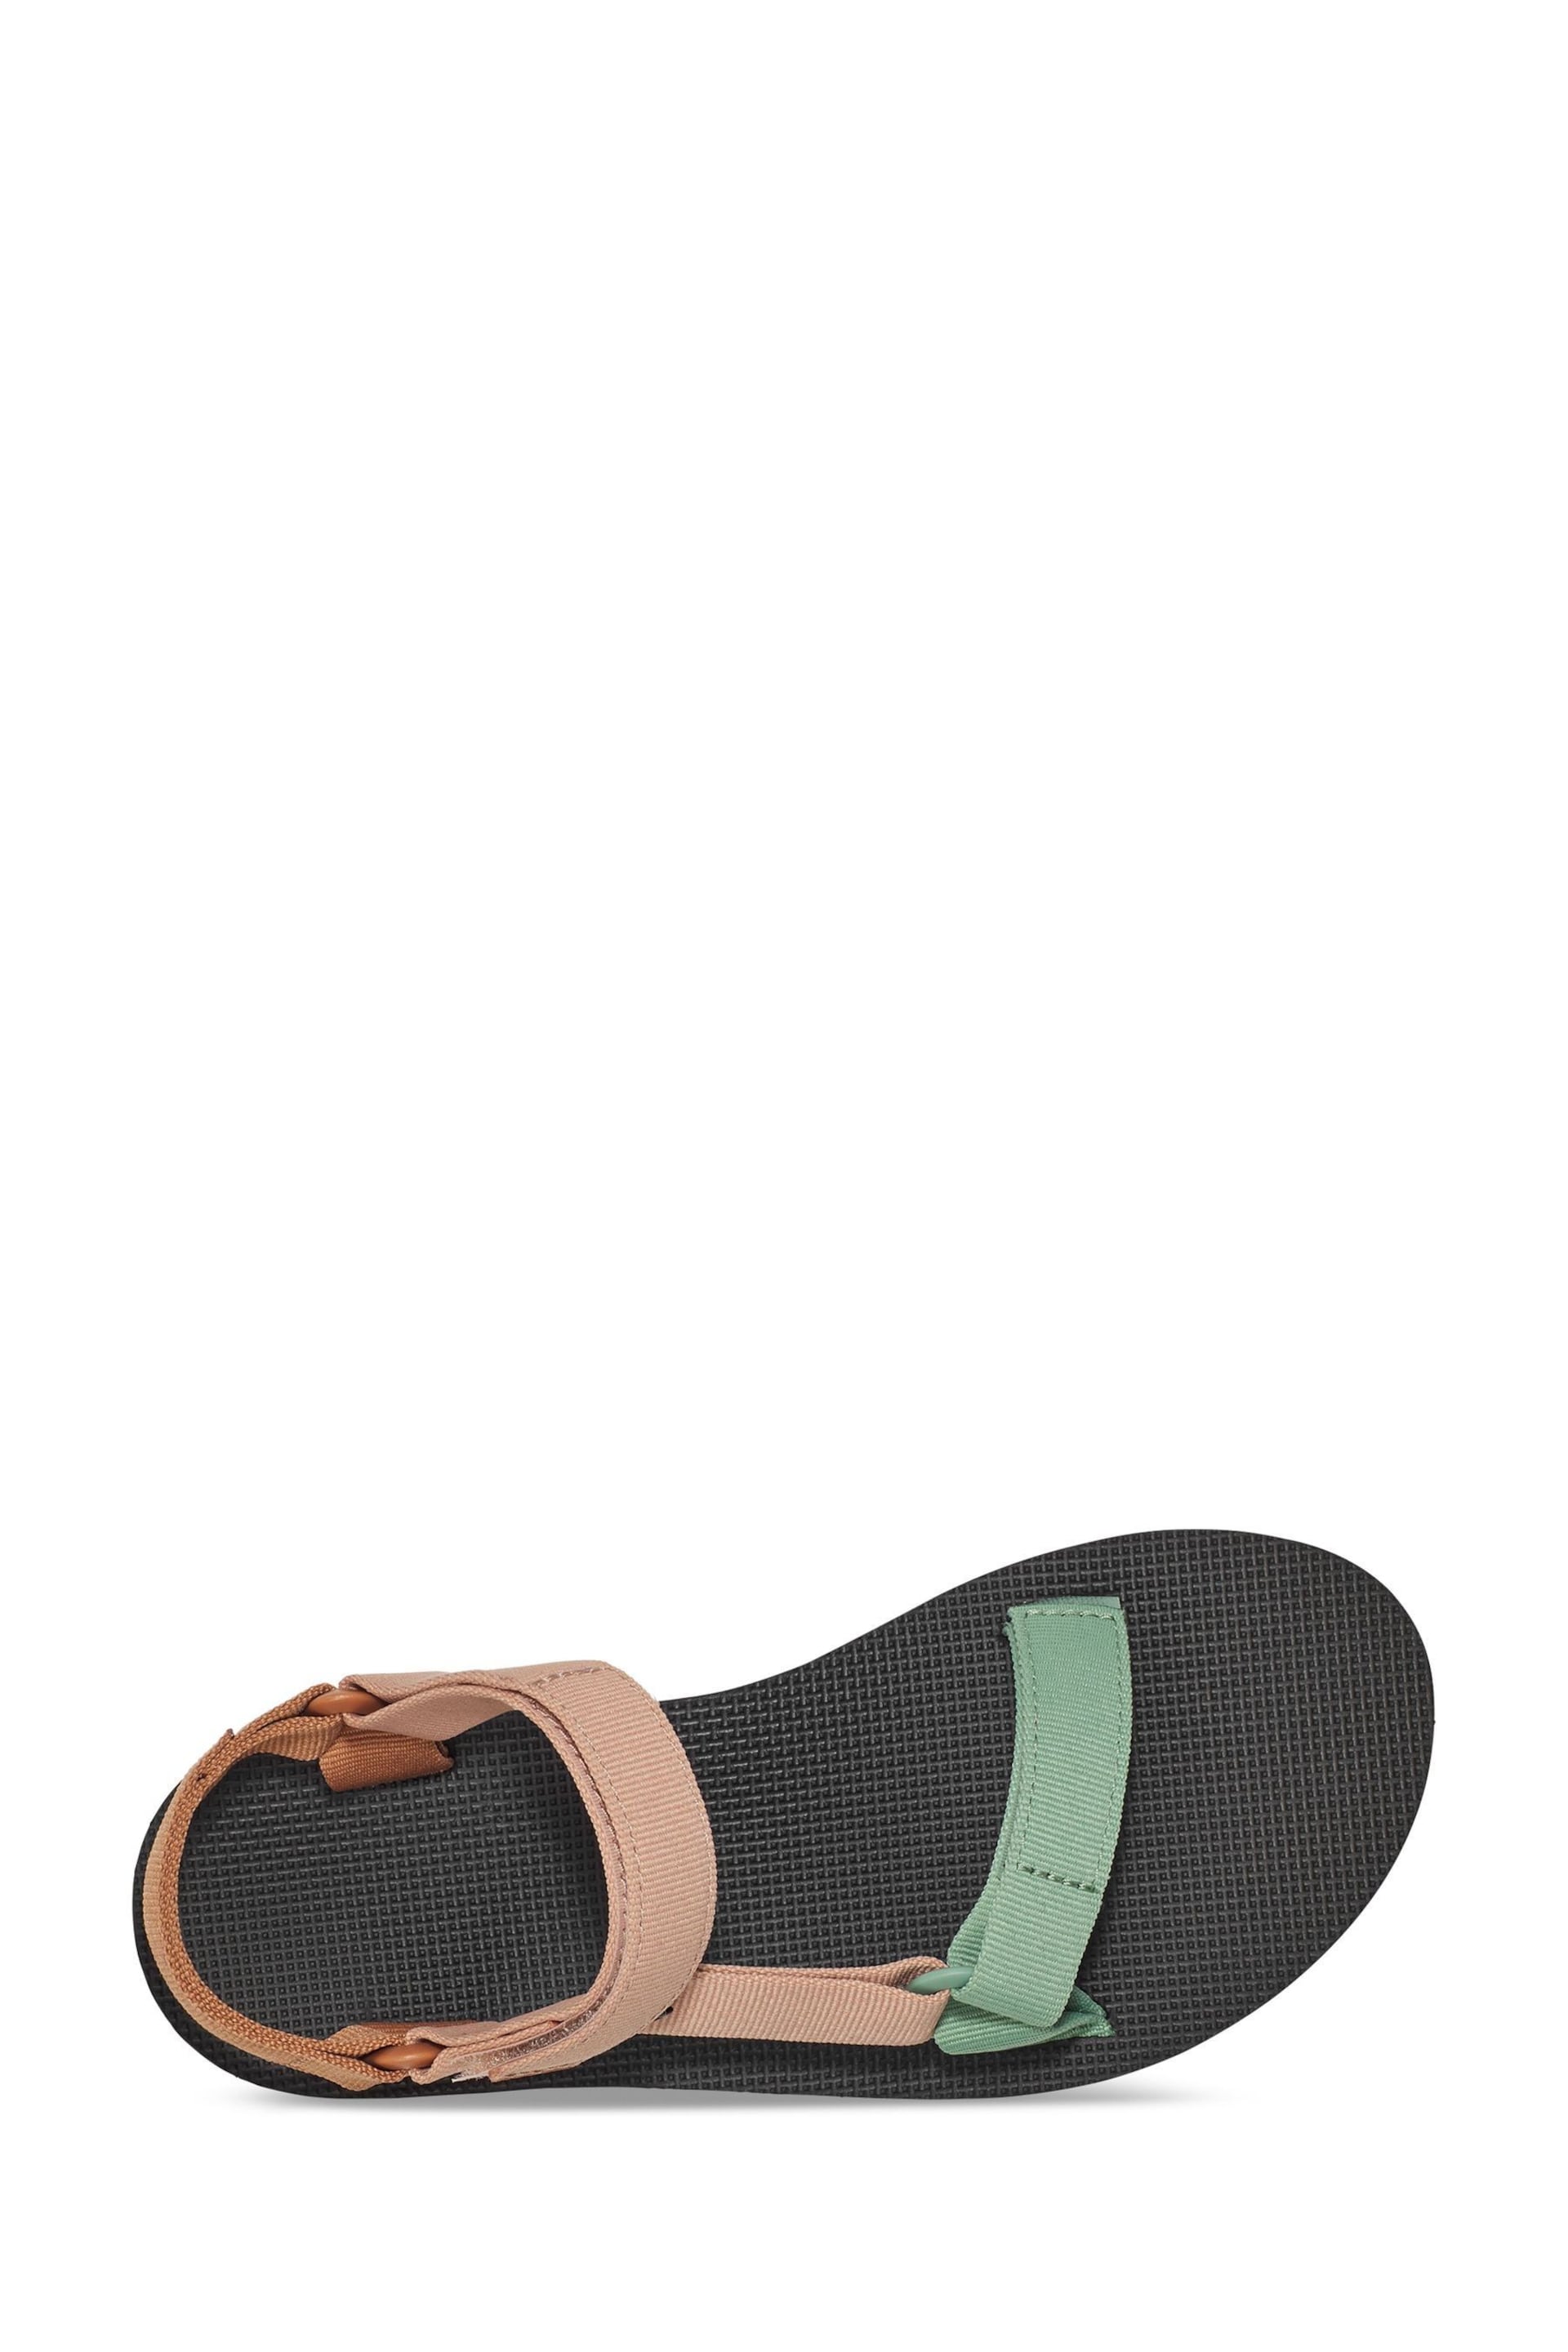 Teva Womens Midform Universal Sandals - Image 12 of 13